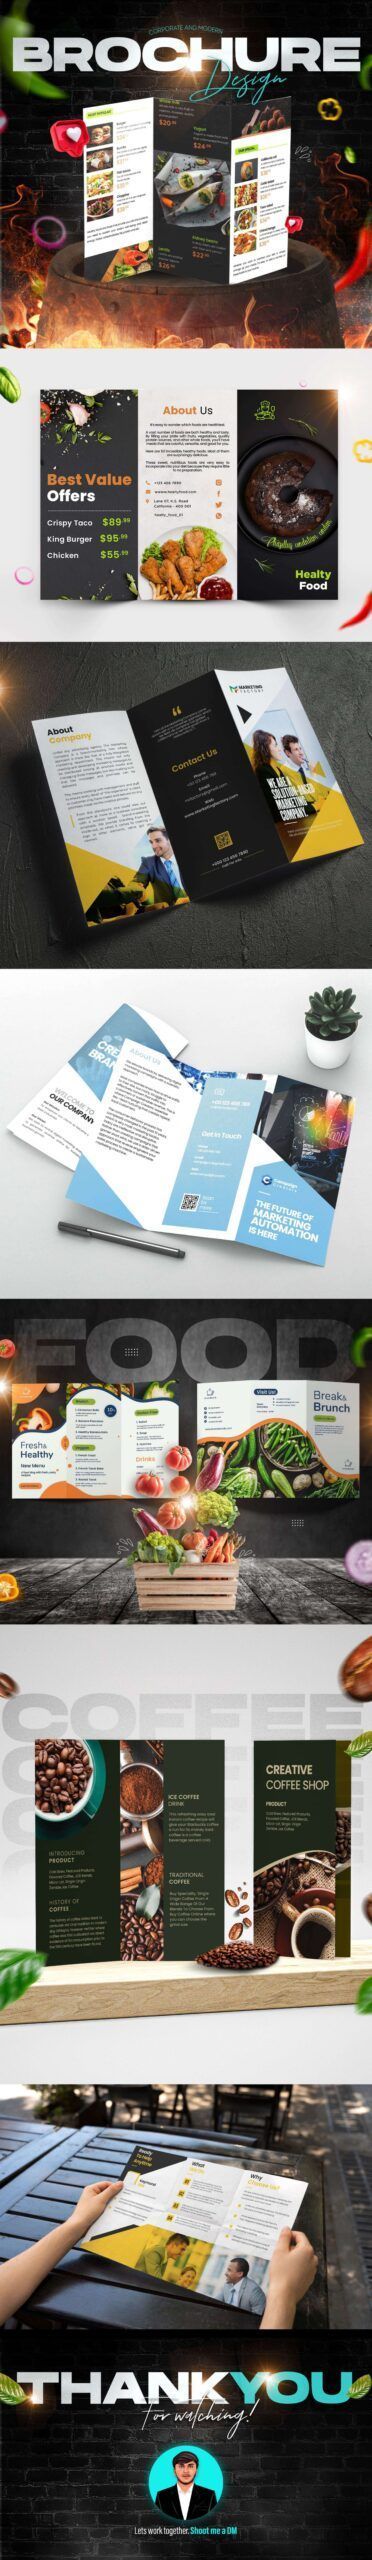 Brochure-Design-Portfolio-Presentation_page-0001-scaled